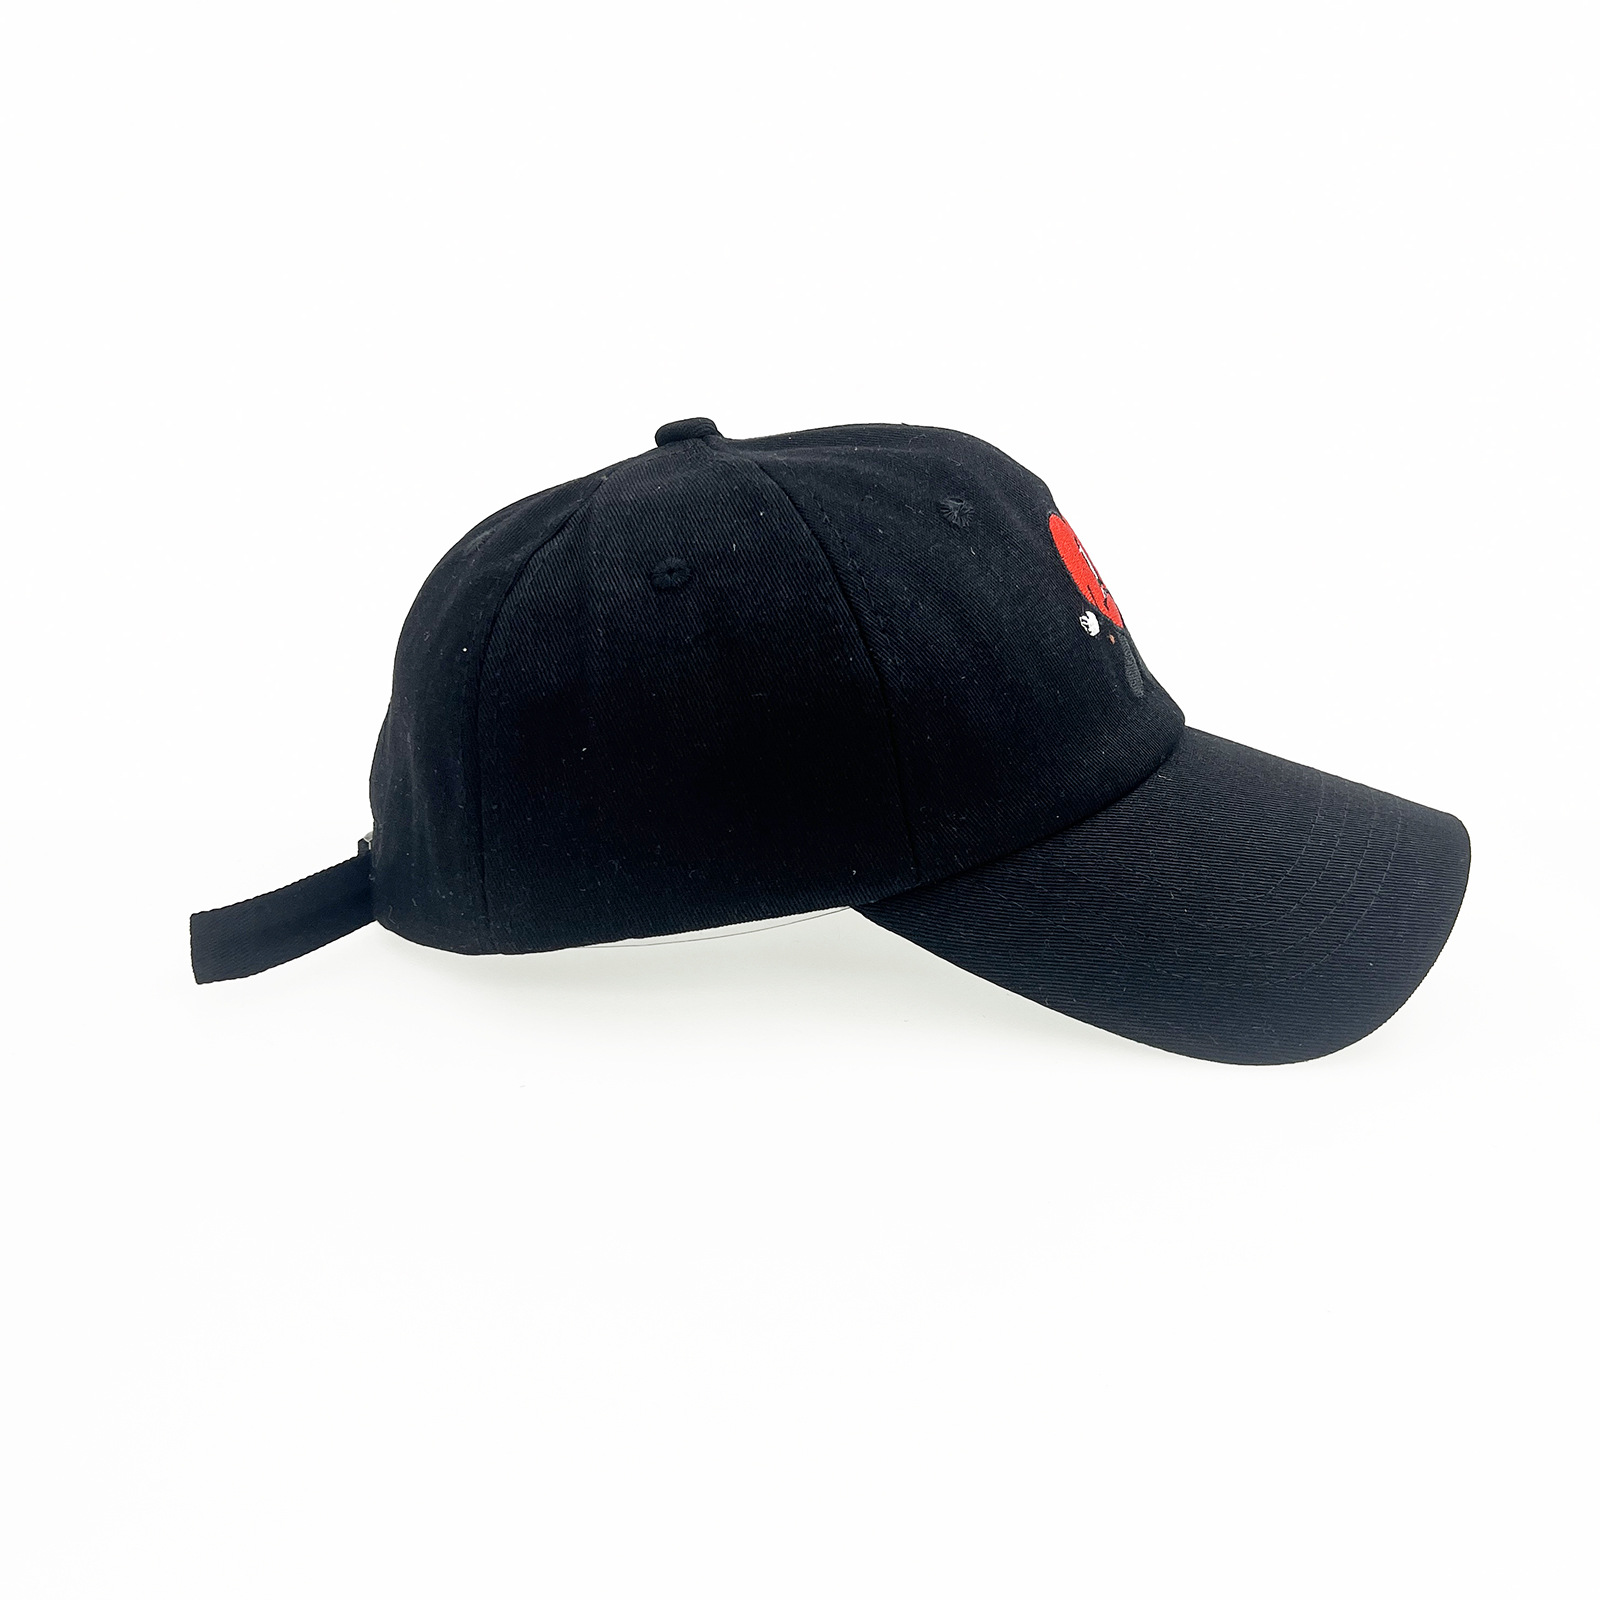 Tech Design Bad Bunny Baseball Cap Embroidered Cotton Adjustable Dad Hat  Black